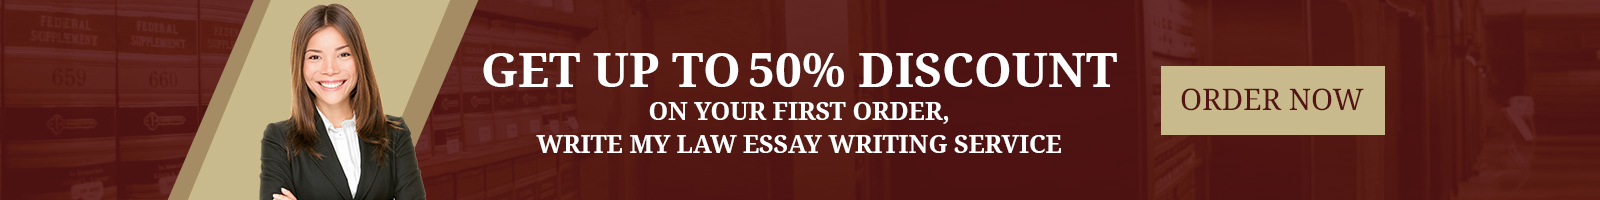 Write My Law Essay Writing Service